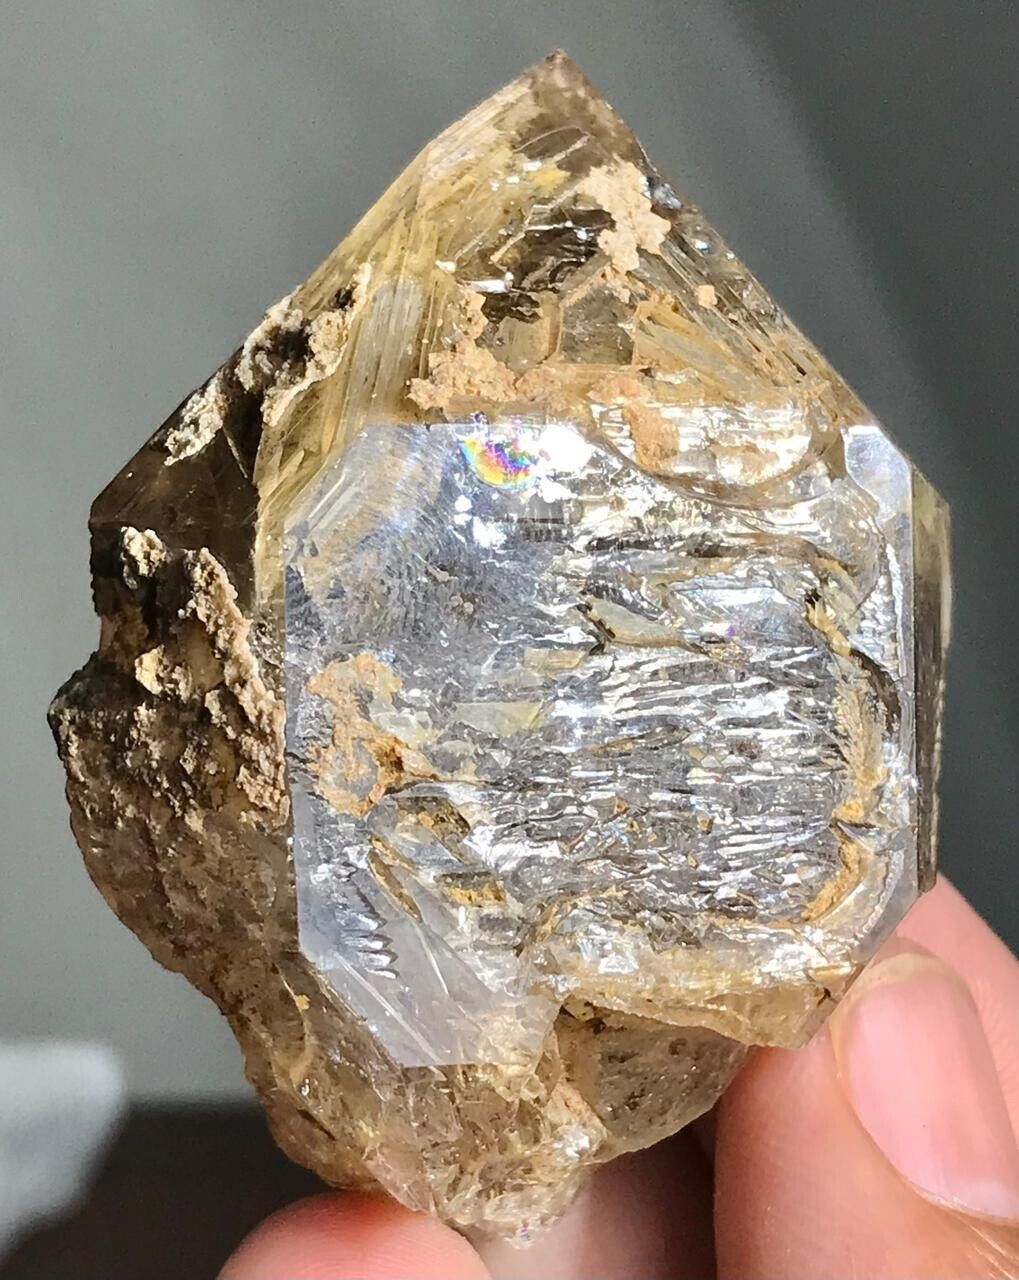 Rare Window Quartz Crystal Minerals Specimen from Pakistan 445 Carats #1